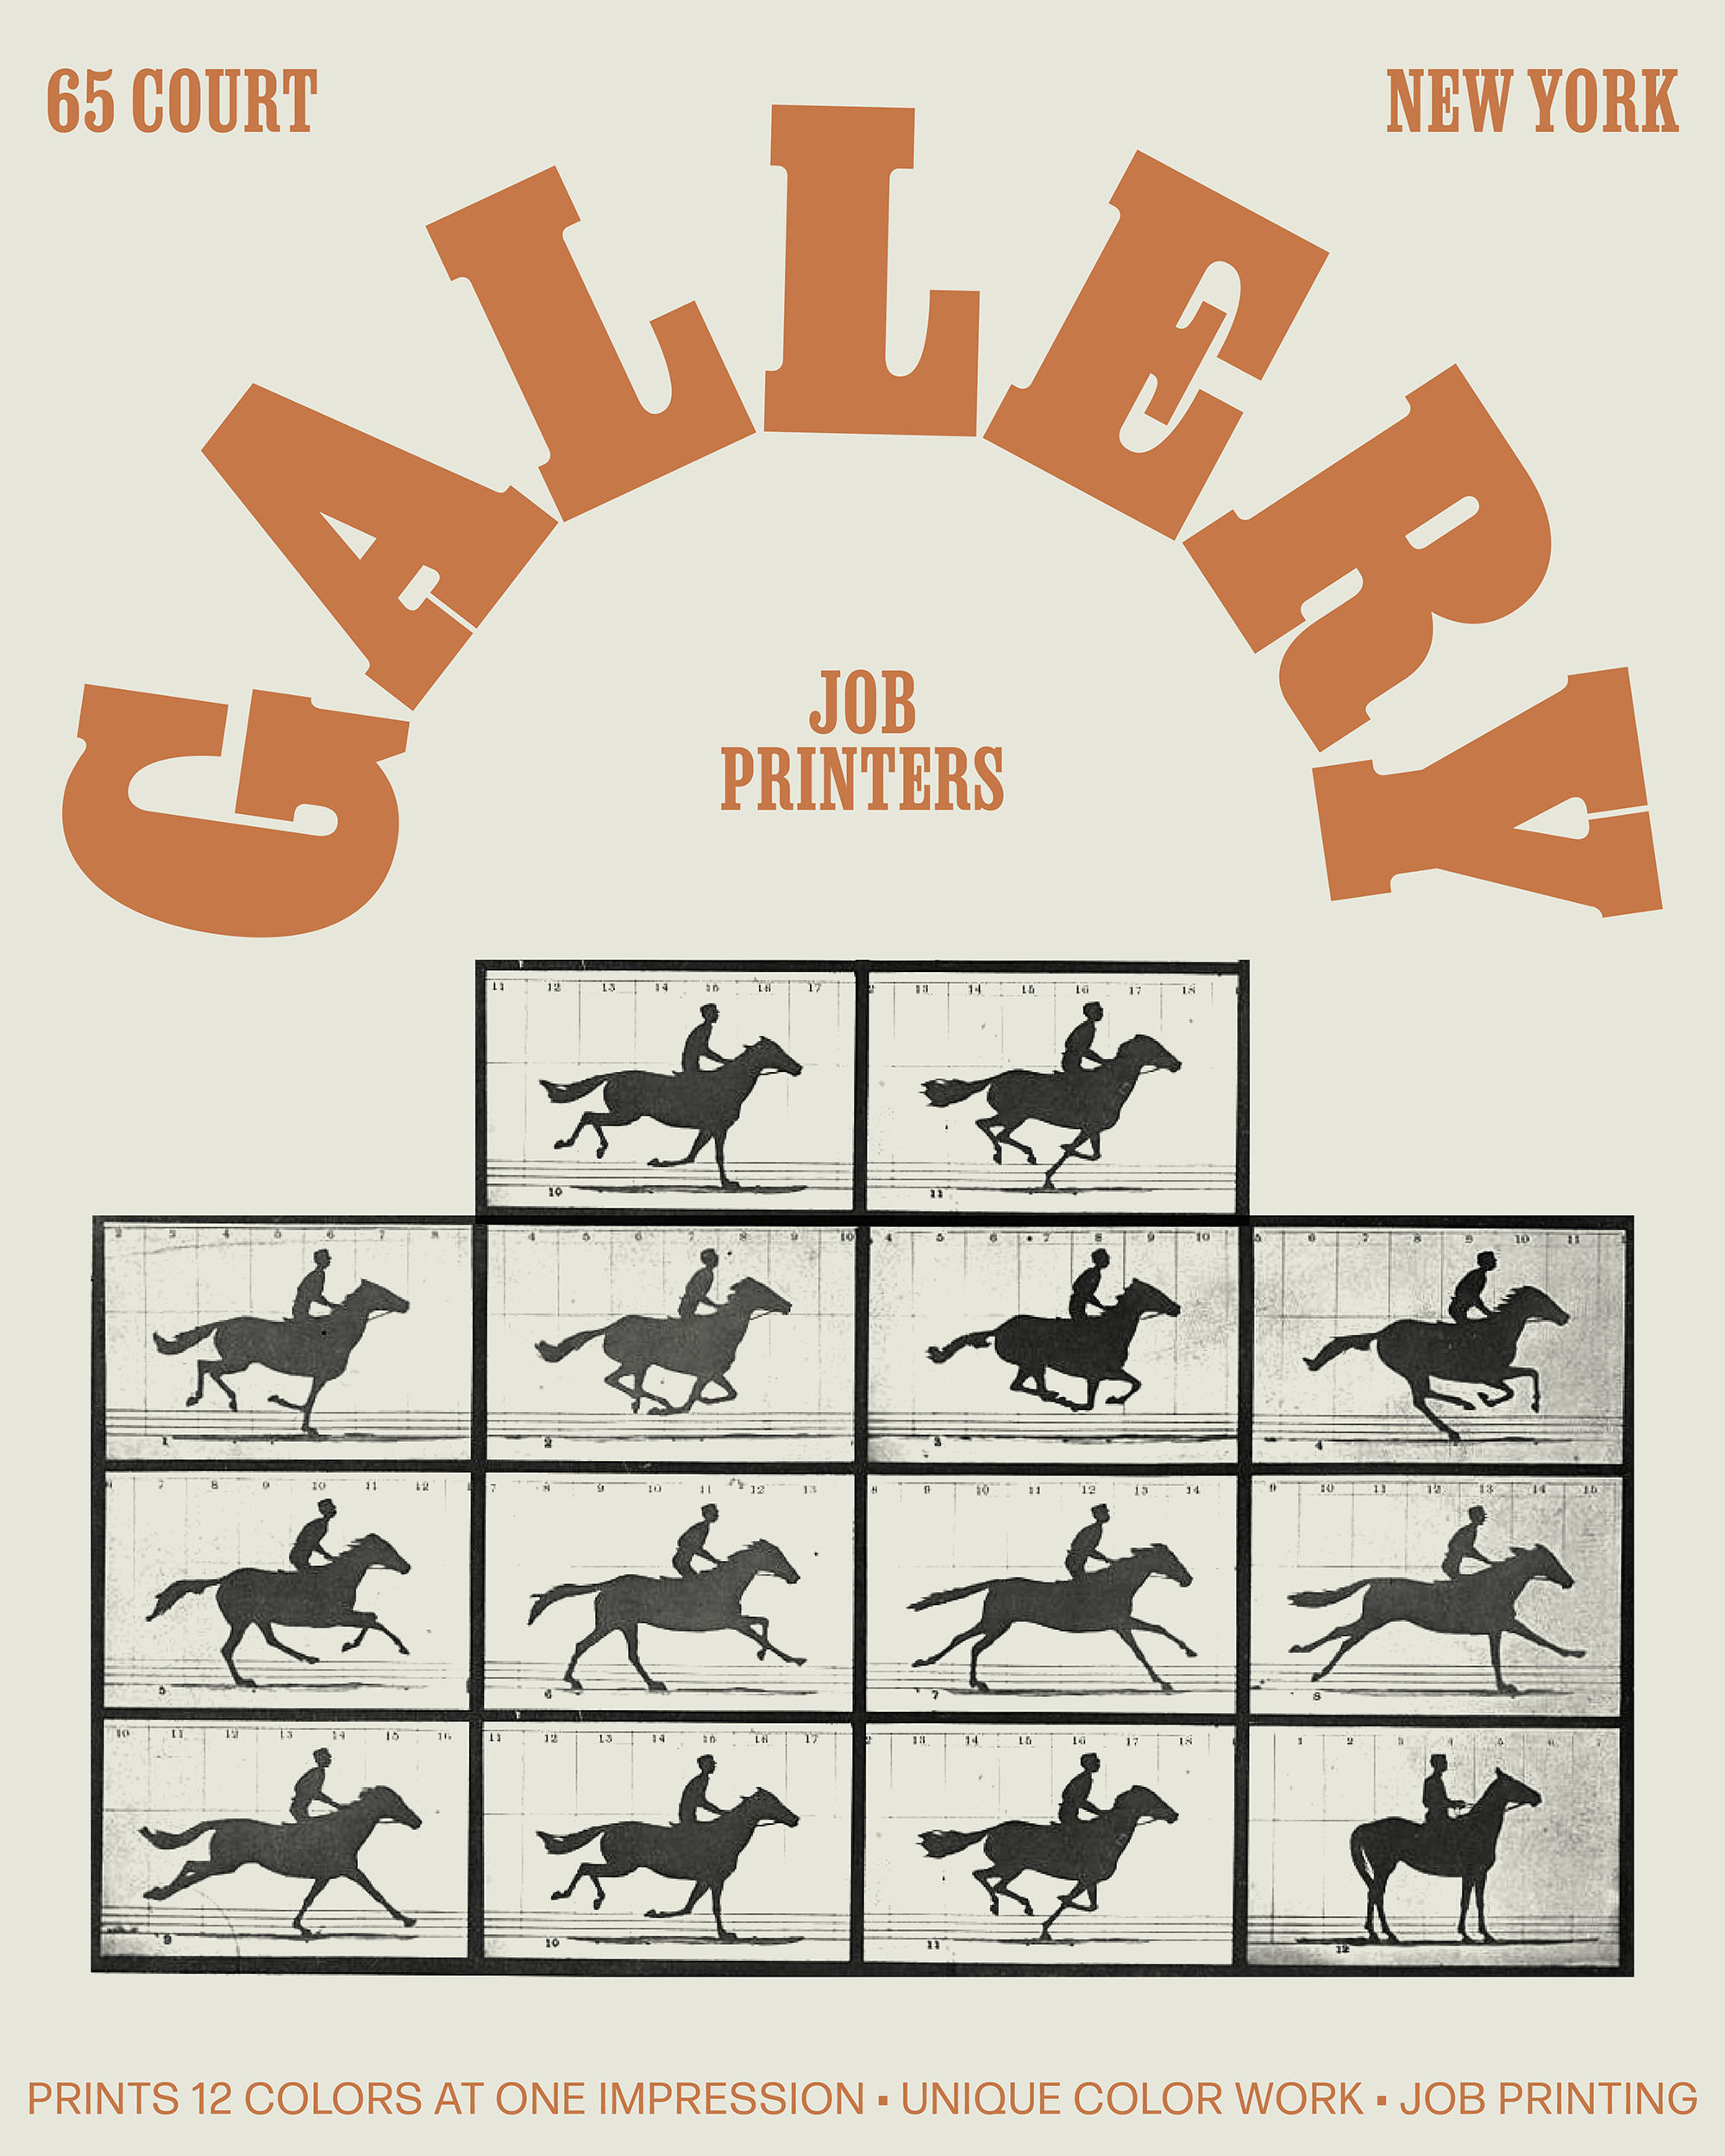 Gallery Job Printers; 65 Court New York